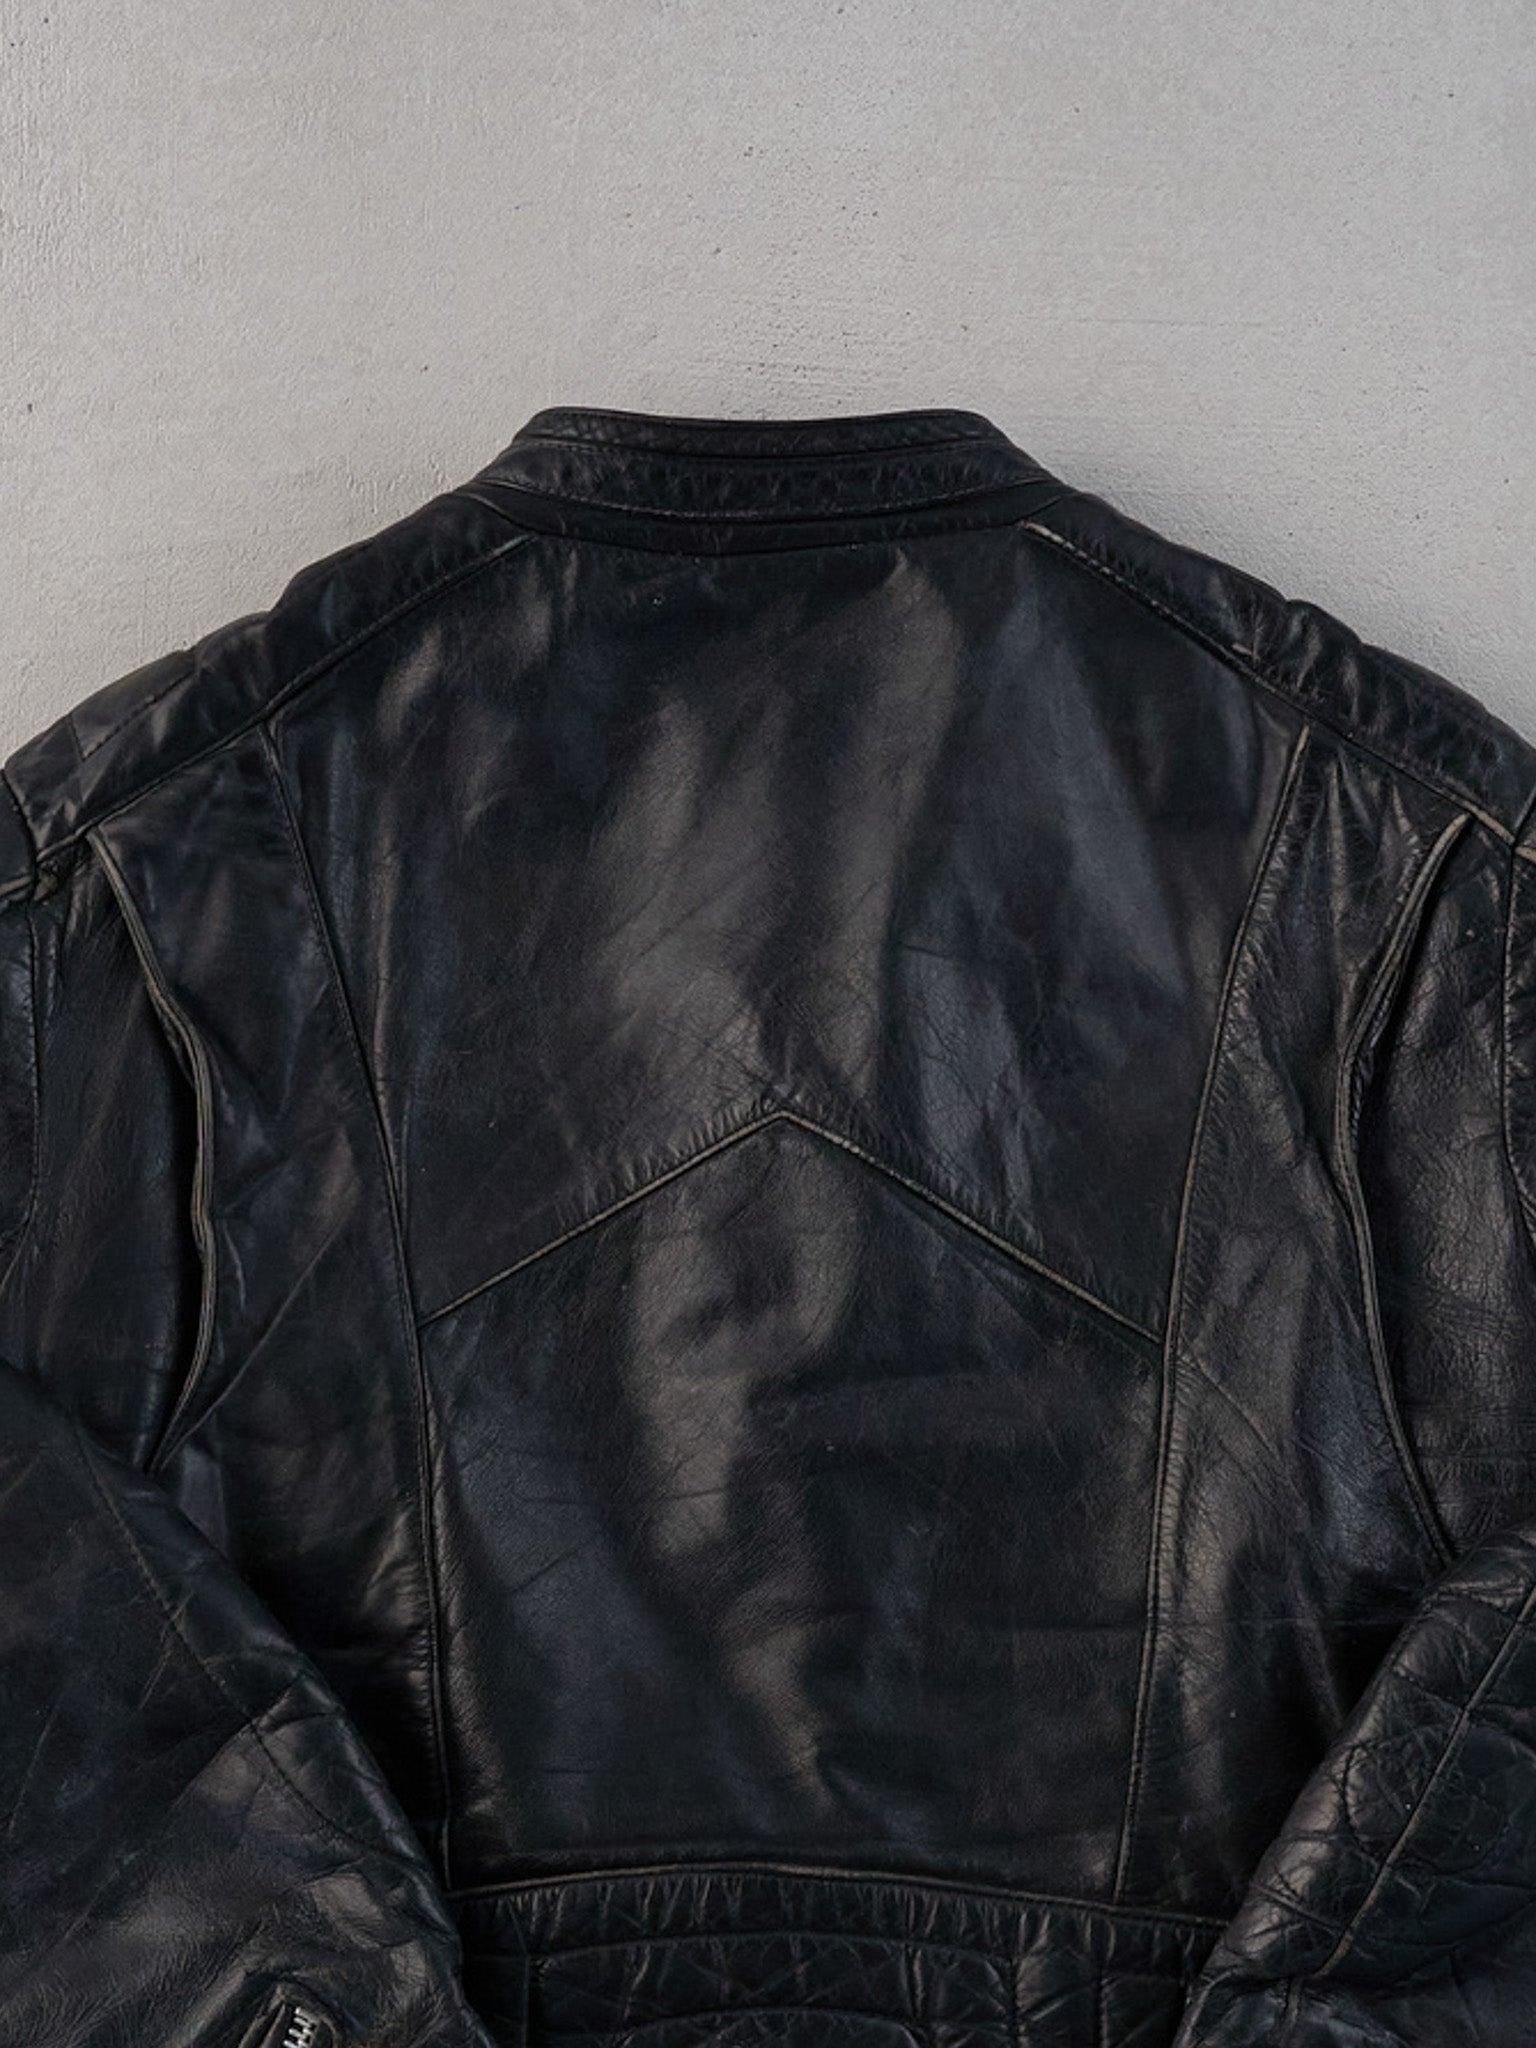 Vintage 90s Black Leather Jacket (S)